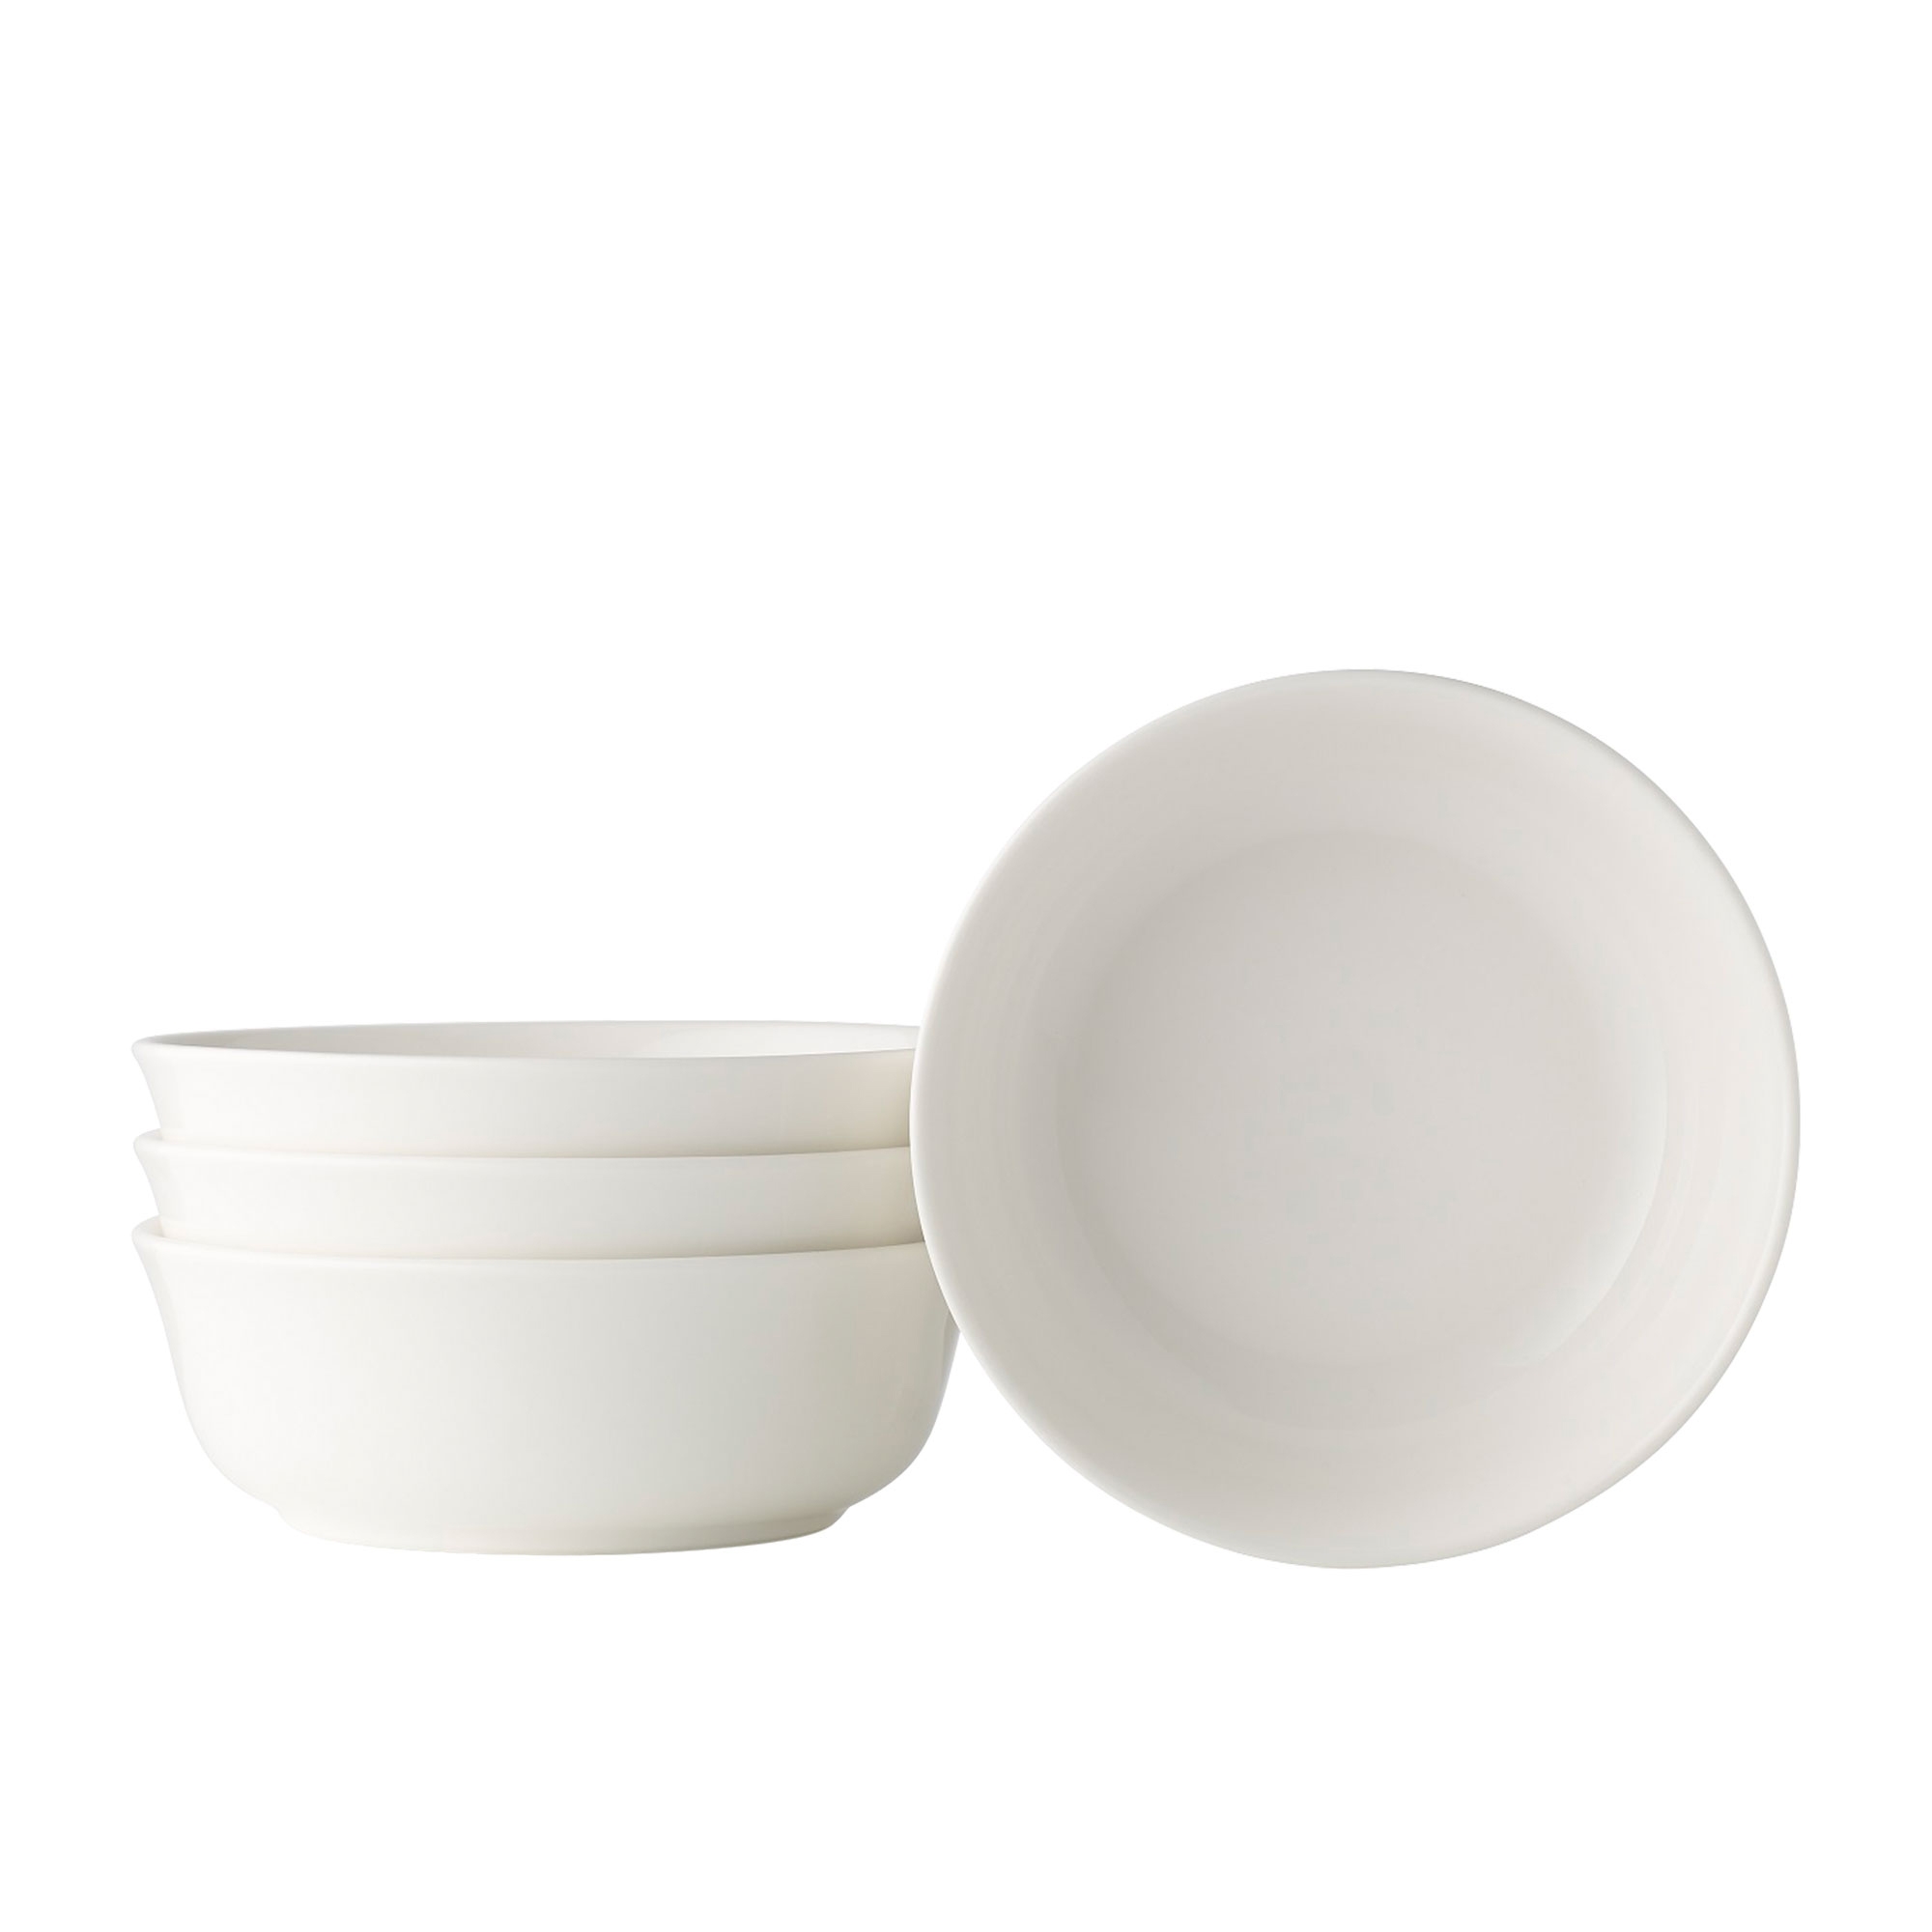 Noritake Everyday by Adam Liaw Rice Bowl Set of 4 White Image 1